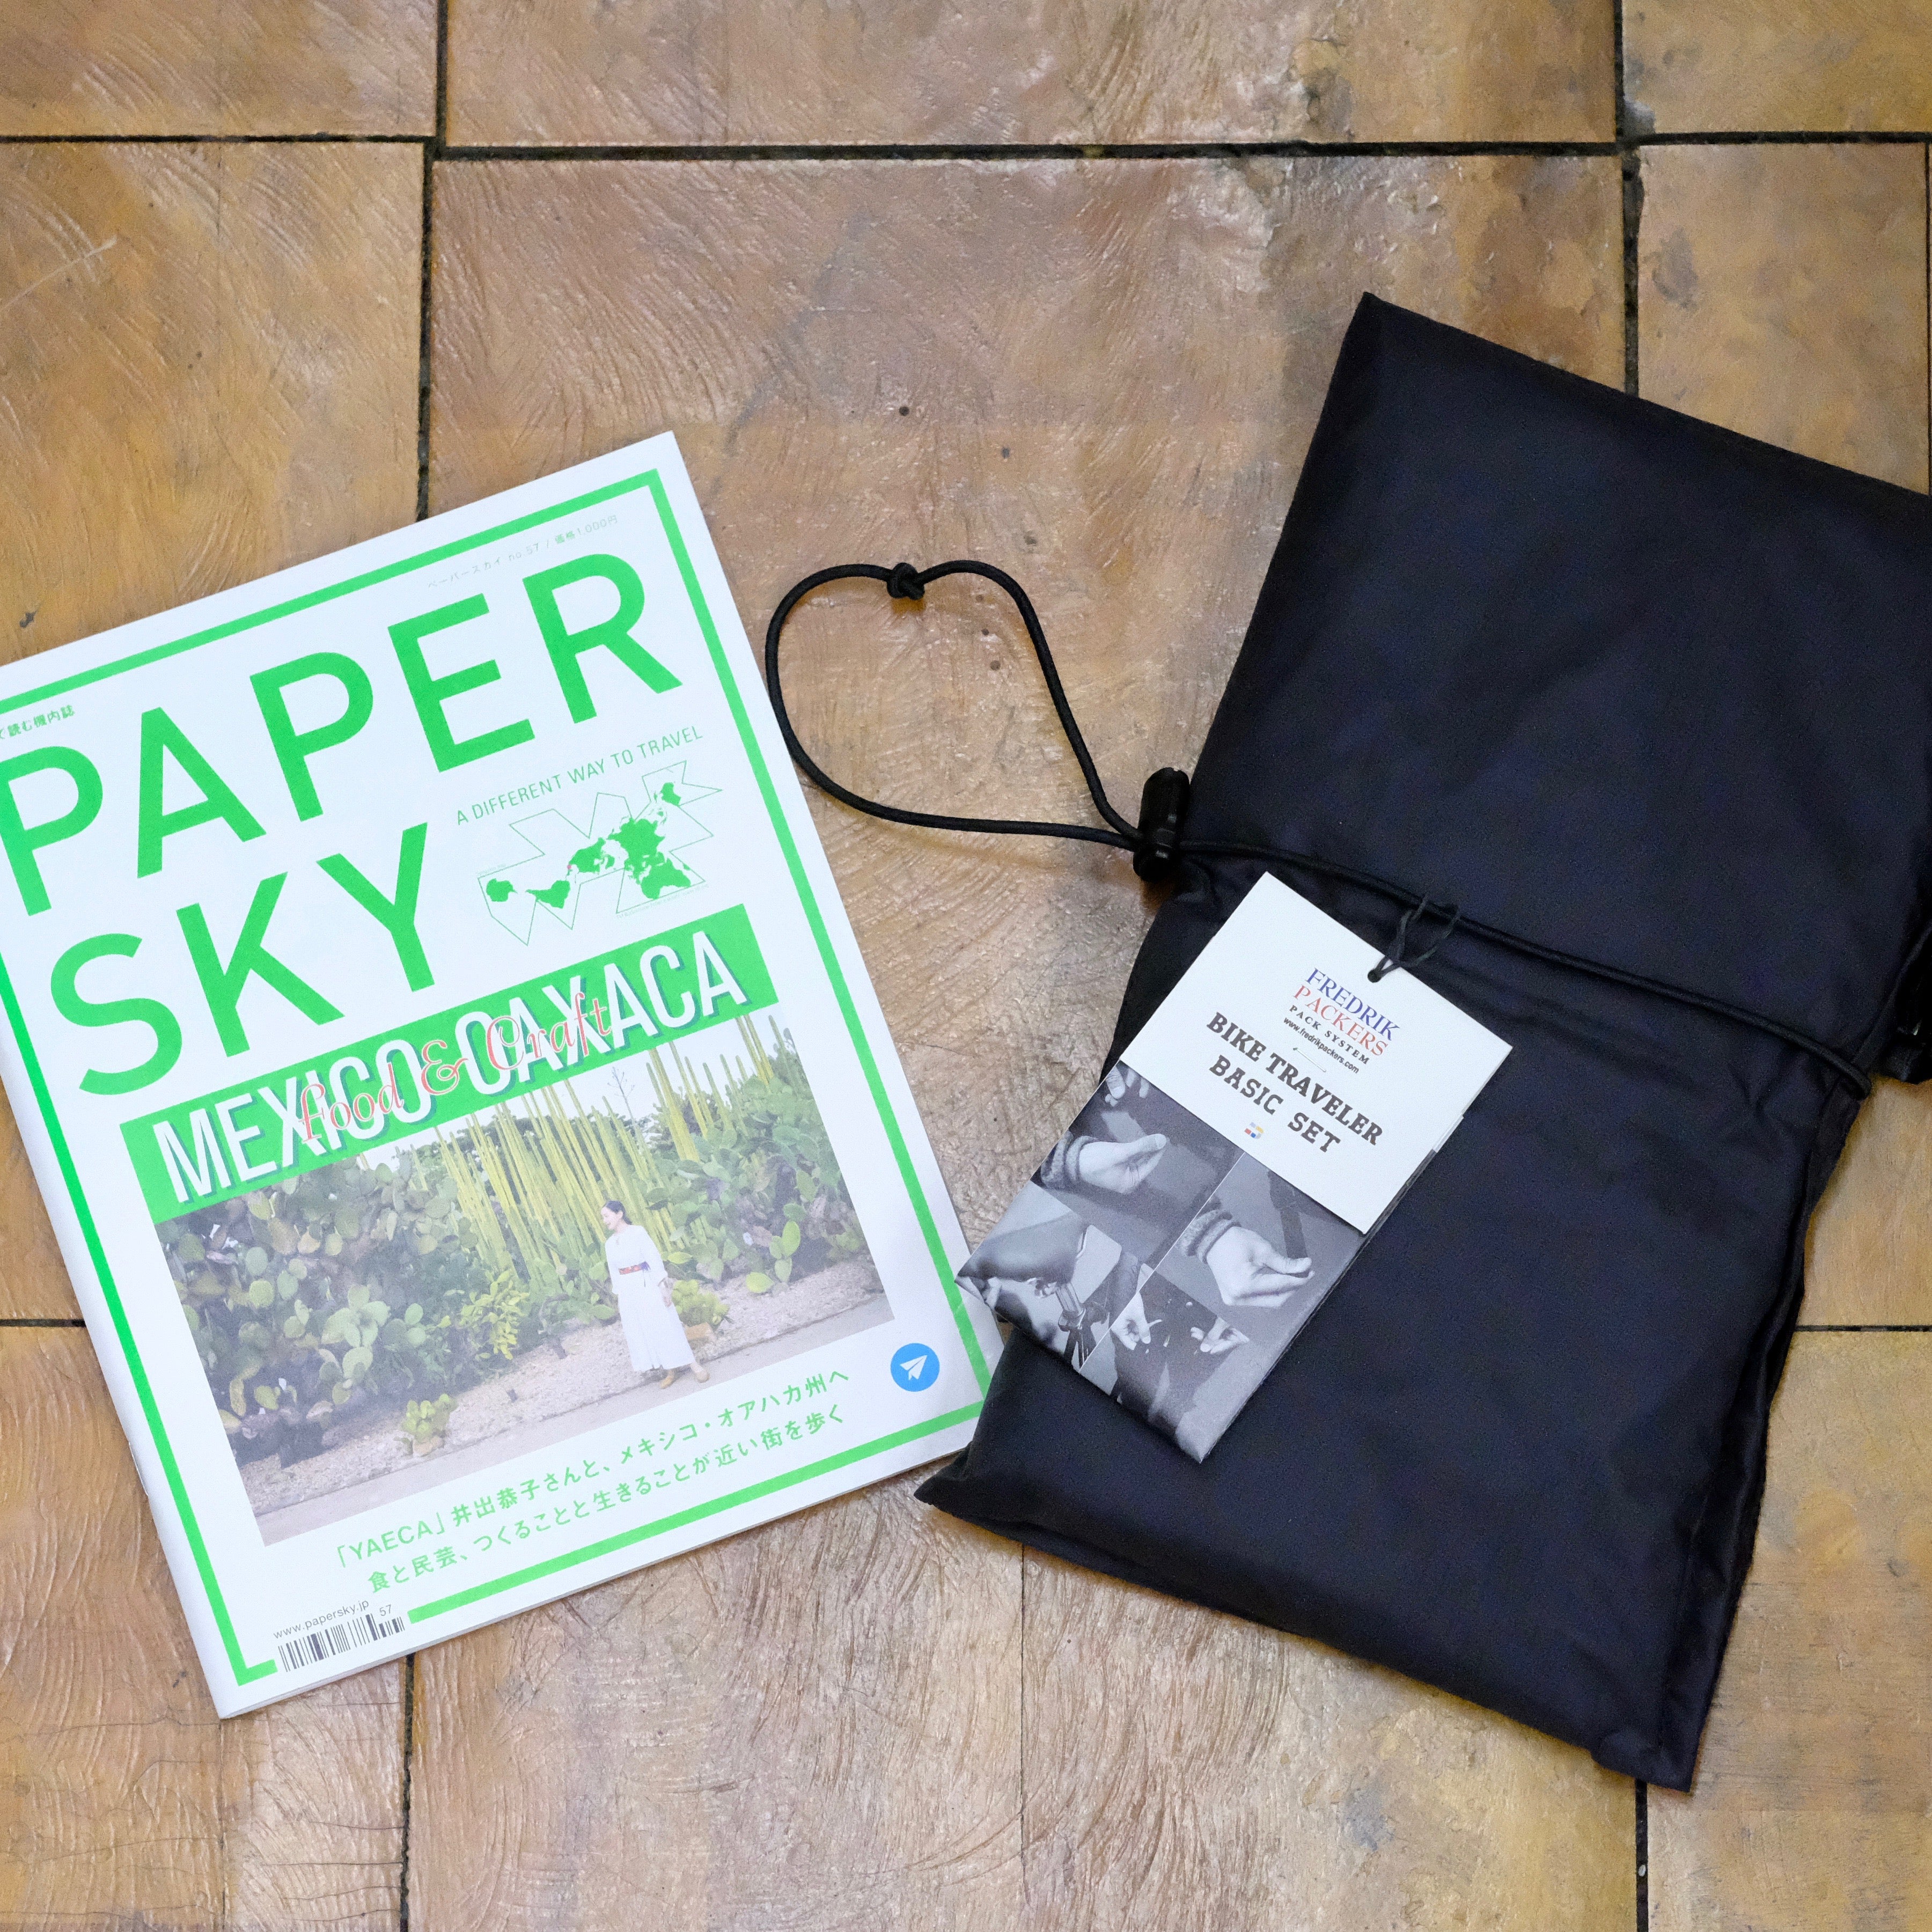 PAPERSKY Bike Traveler Kit Bag